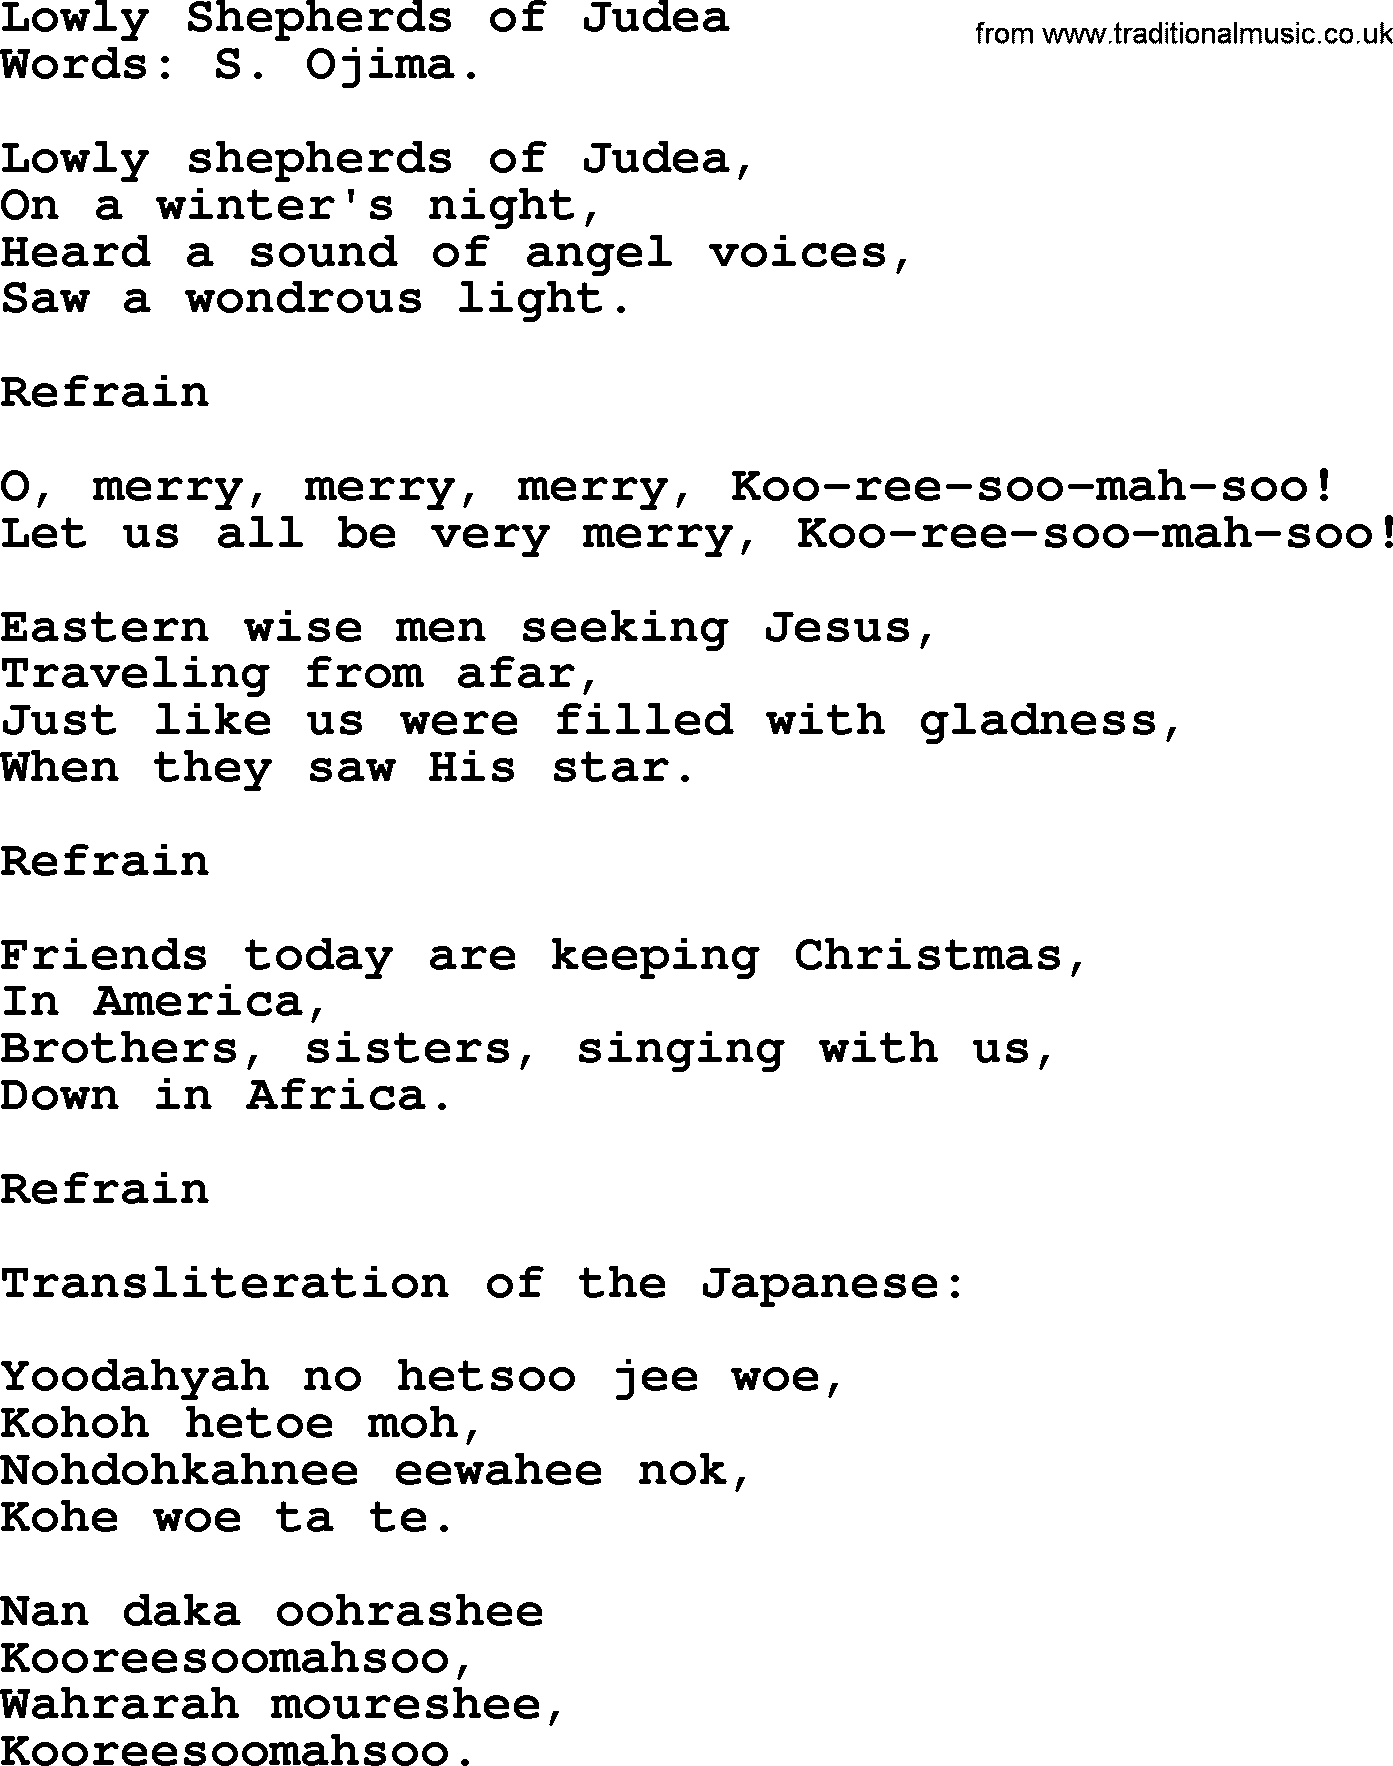 Christmas Hymns, Carols and Songs, title: Lowly Shepherds Of Judea, lyrics with PDF